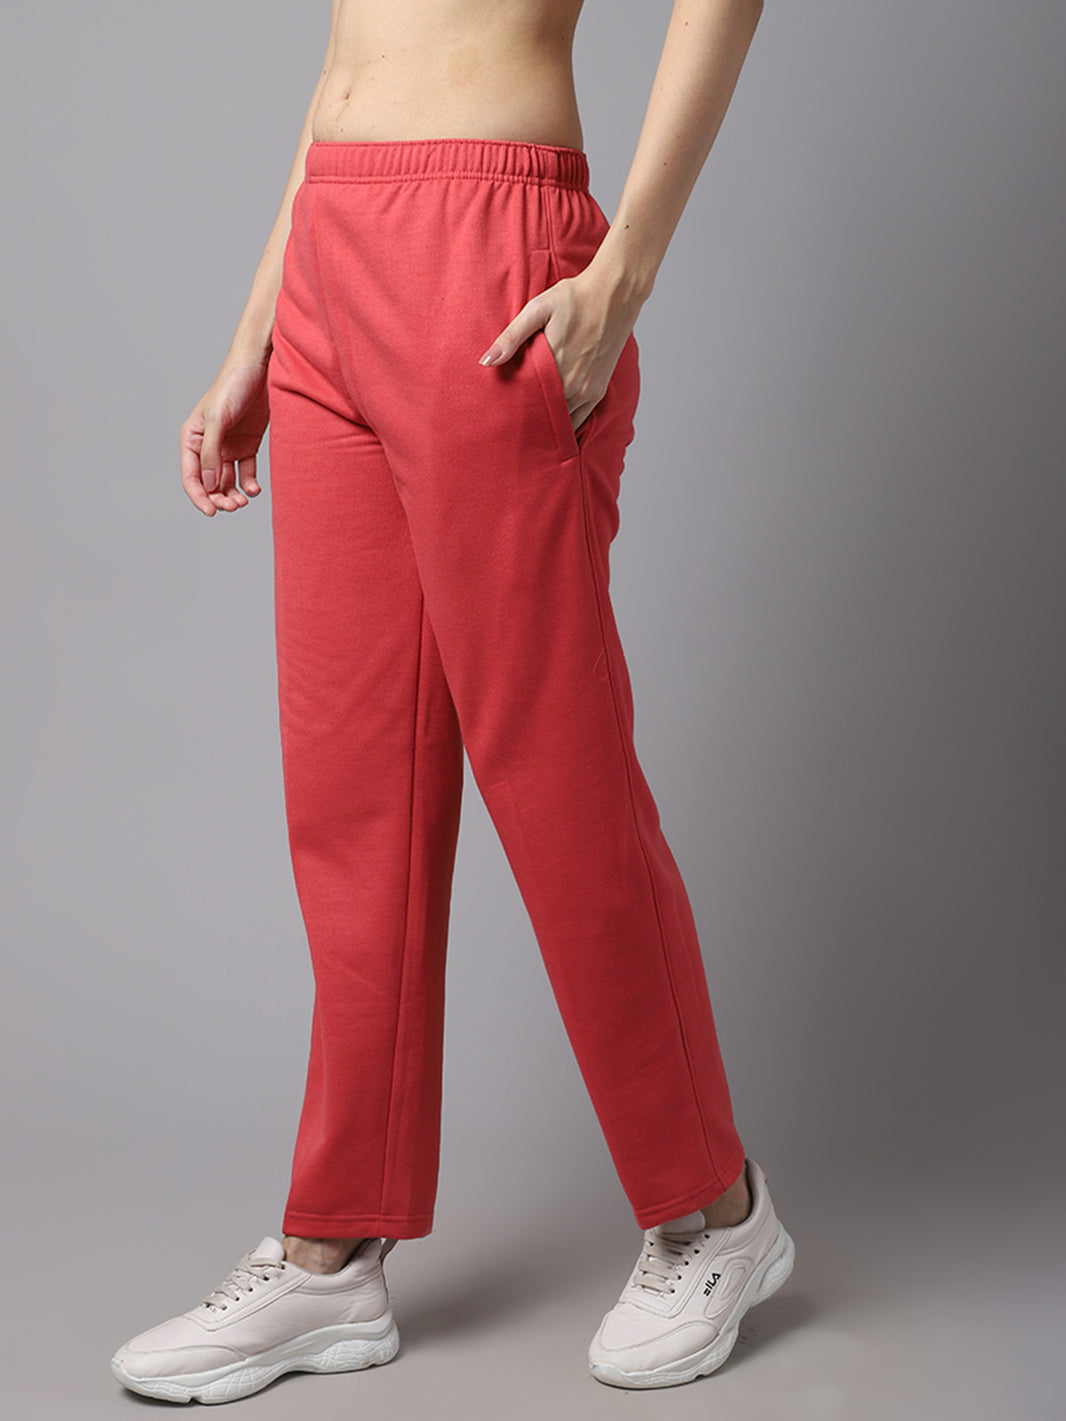 Vimal Jonney Fleece Regular-Fit Pink Trackpant for Women